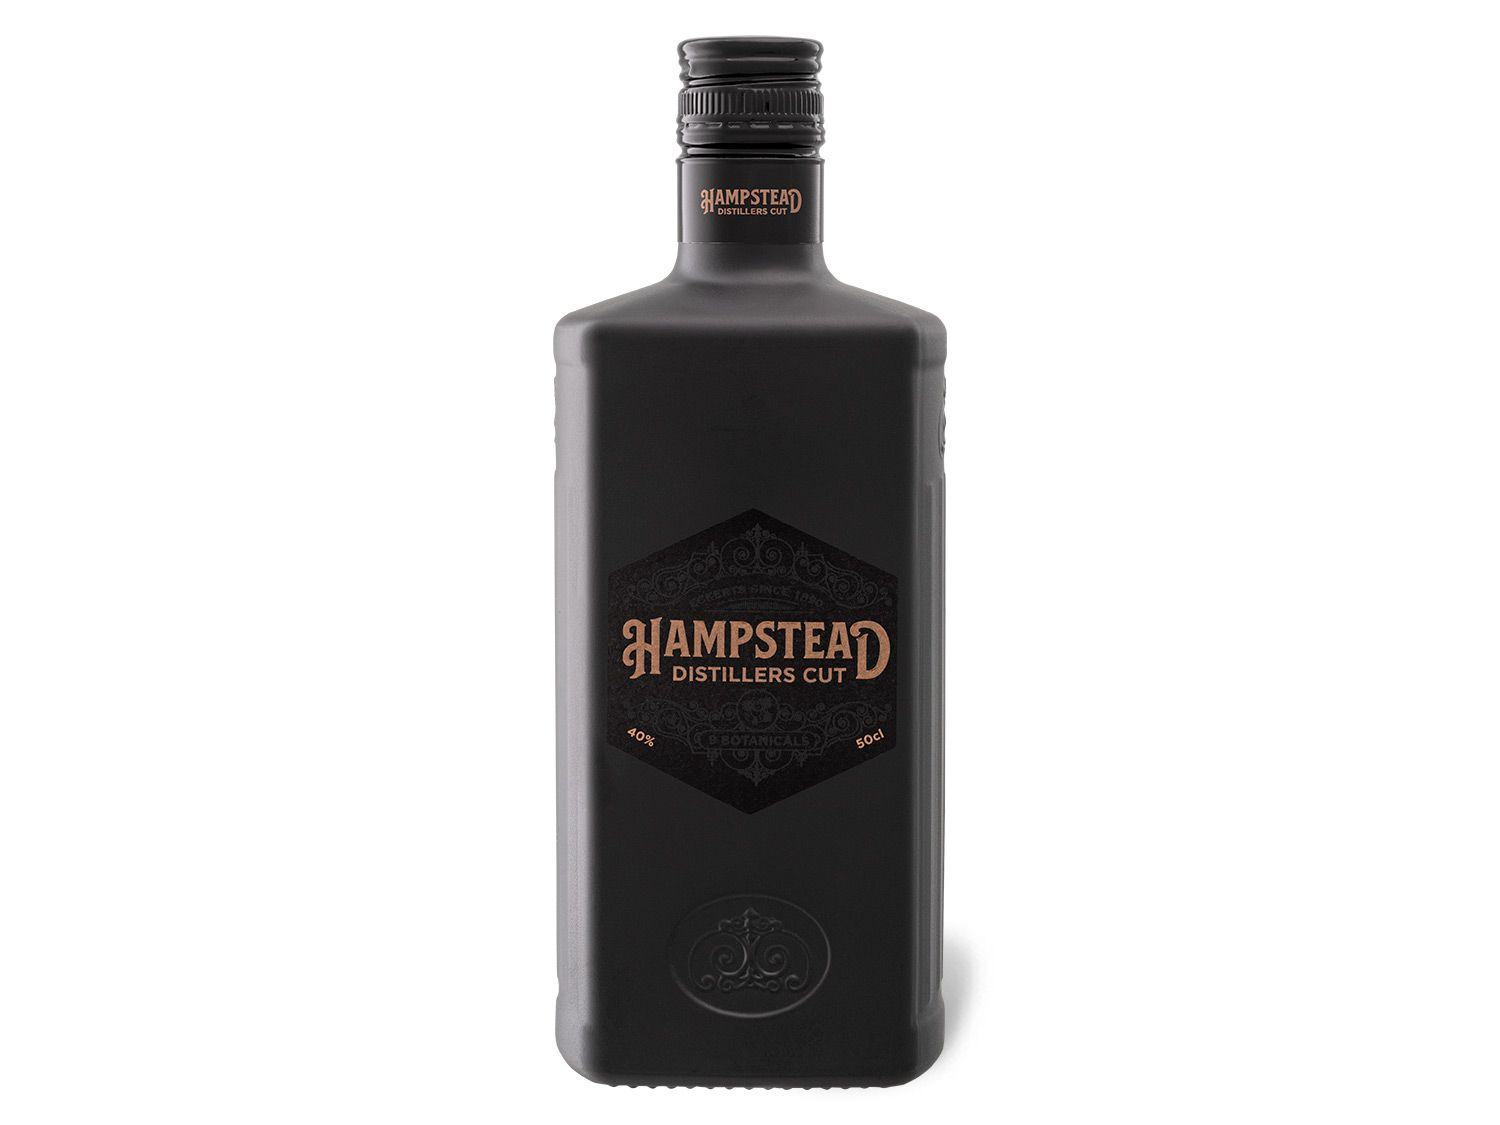 Hampstead Gin Distillers LIDL 40% Cut Vol 